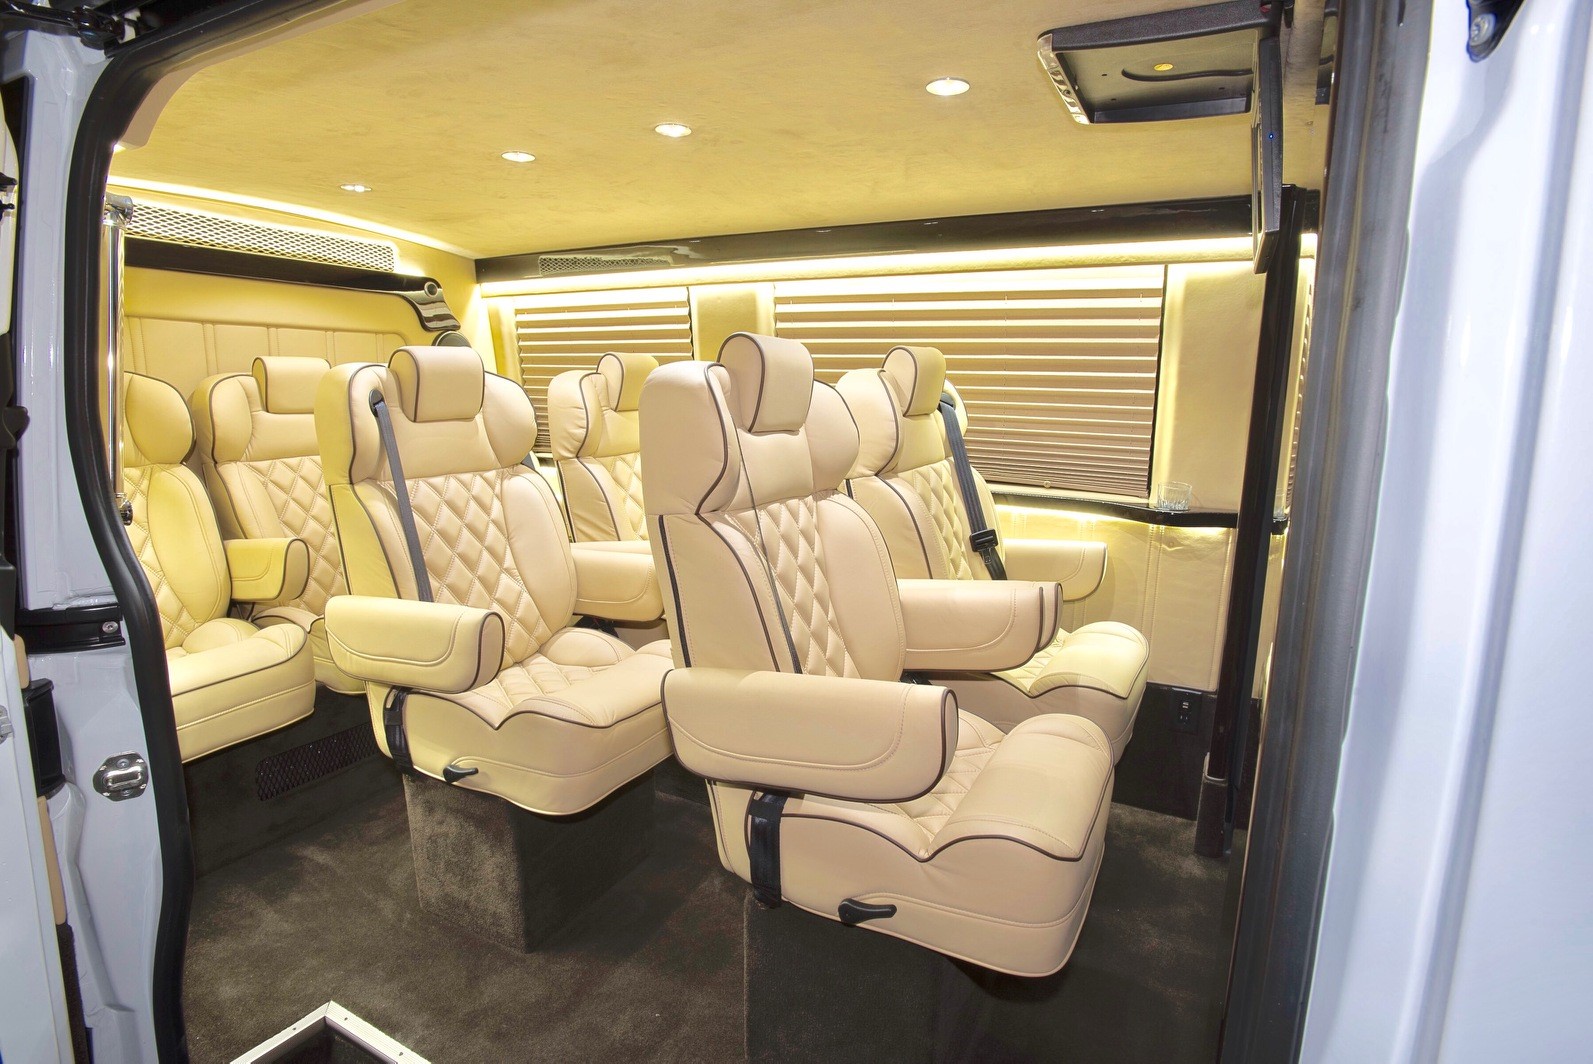 Modena shuttle seating bus installation